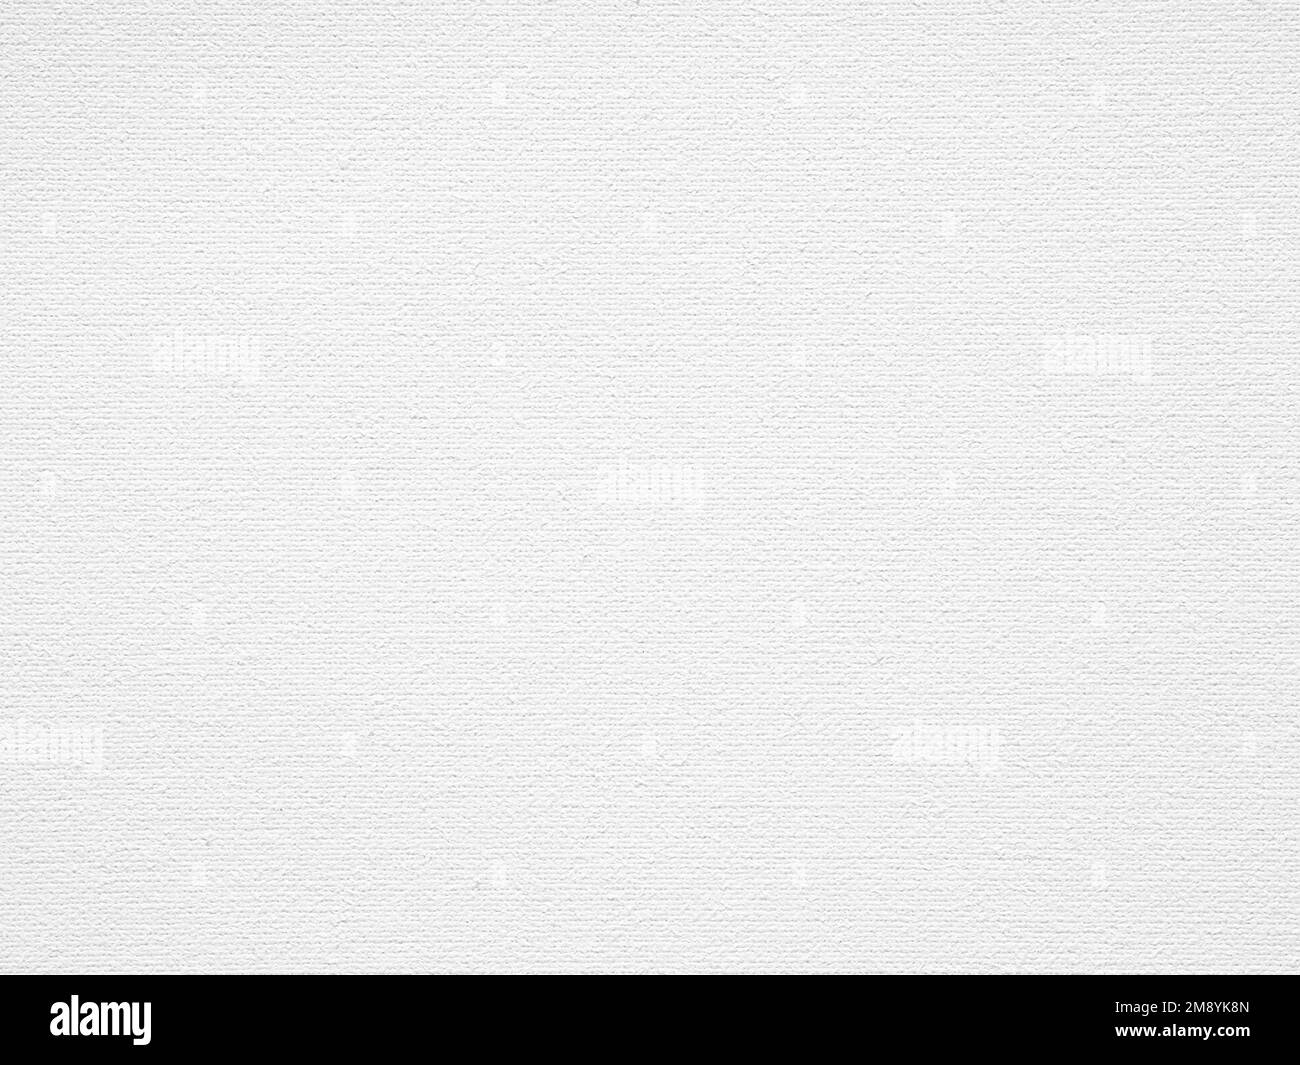 Tarpaulin background Black and White Stock Photos & Images - Alamy